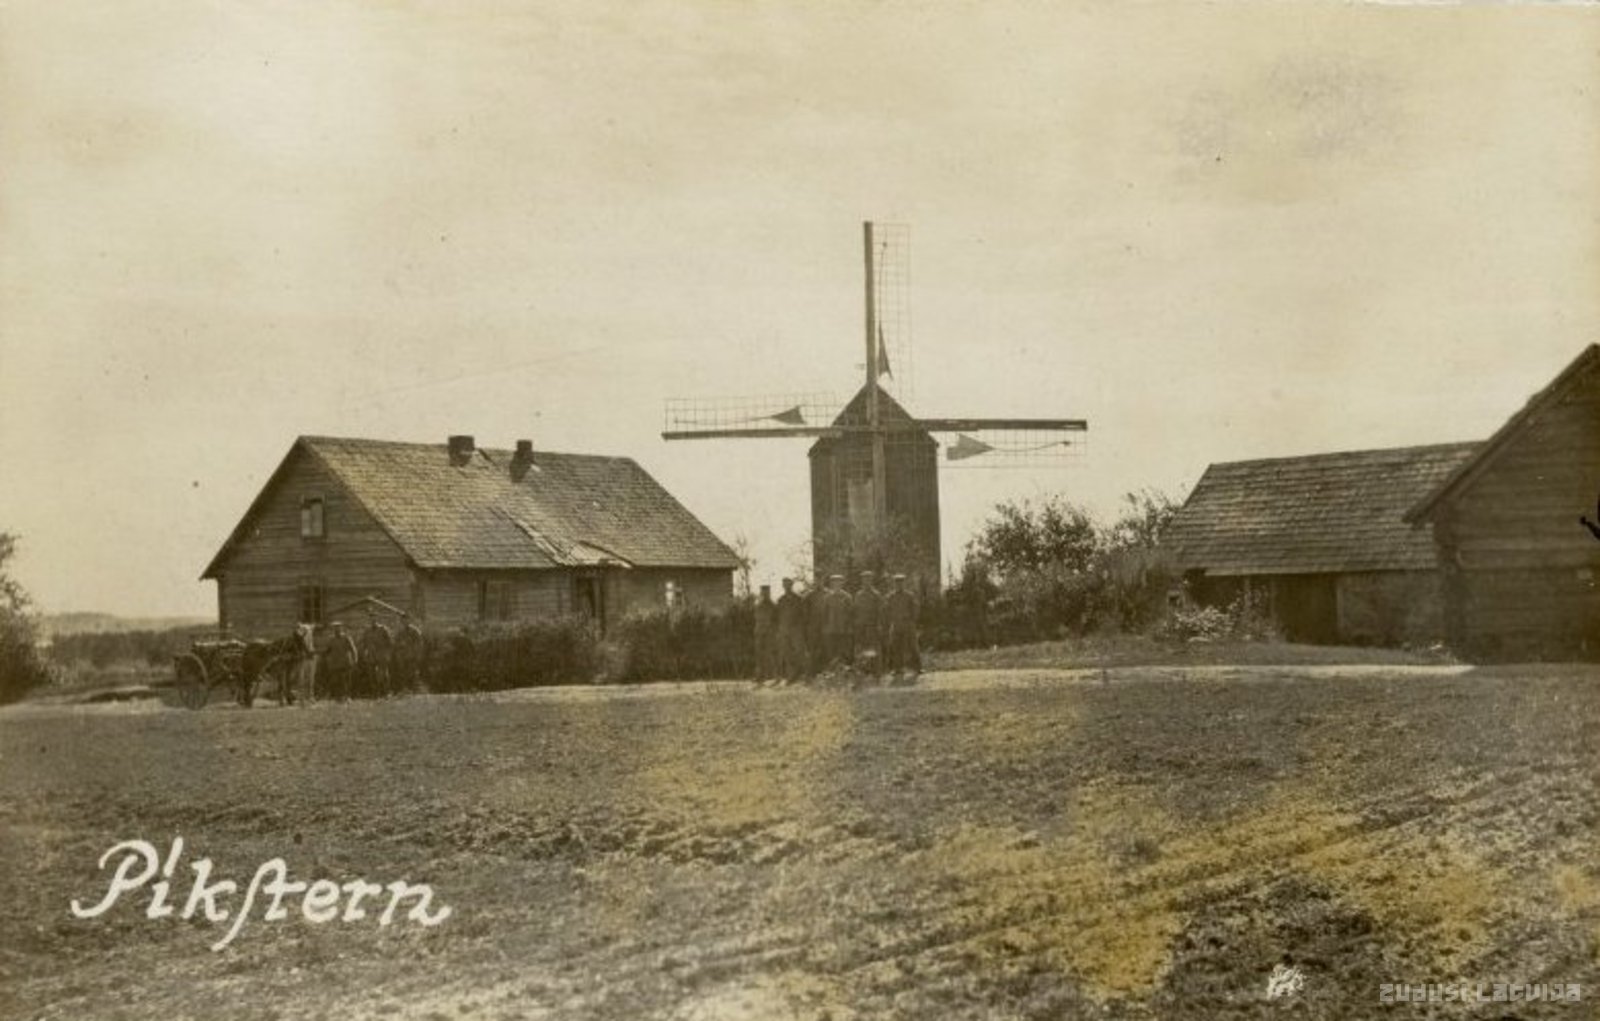 Pikstern, Sunākste. Rural houses and windmills